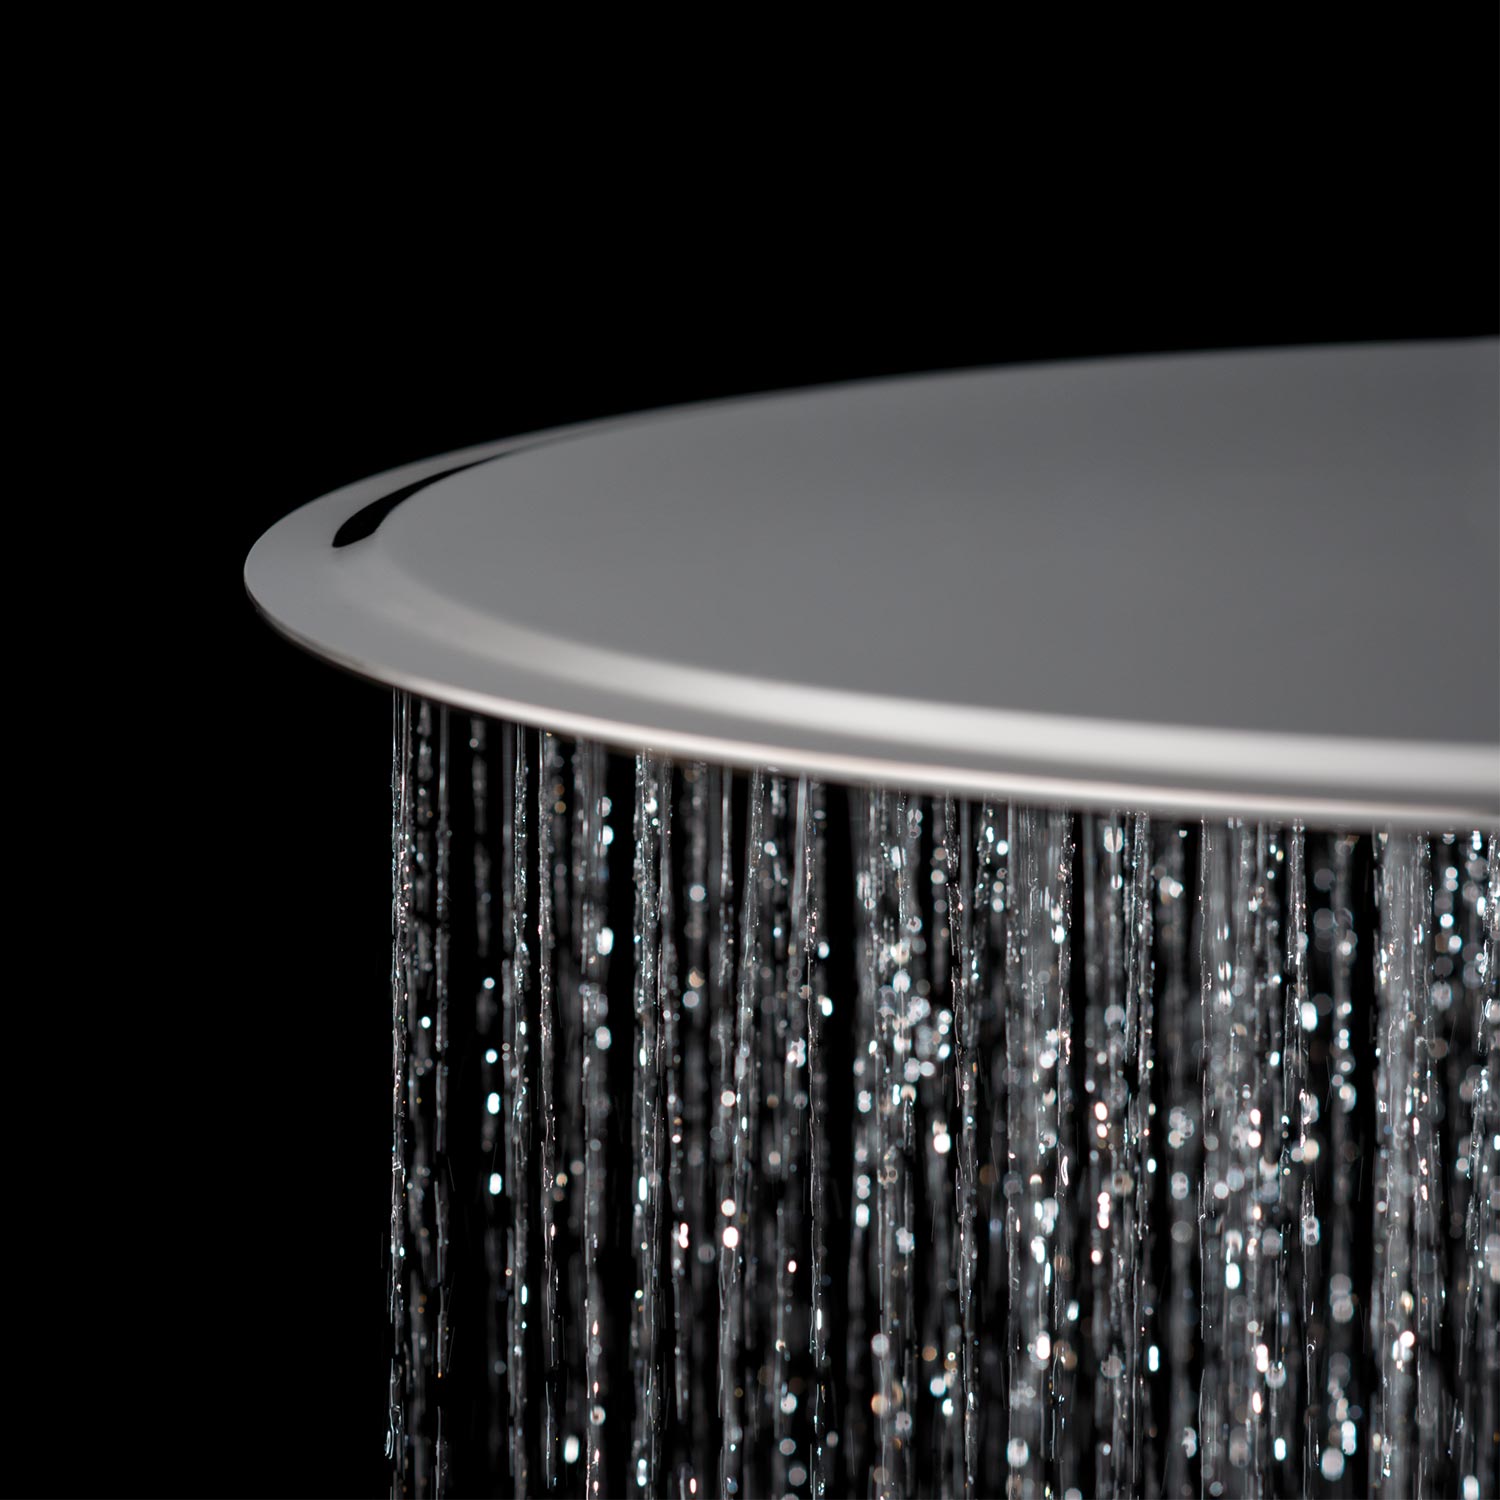 Slimline modern round shower with water cascading against a black background.